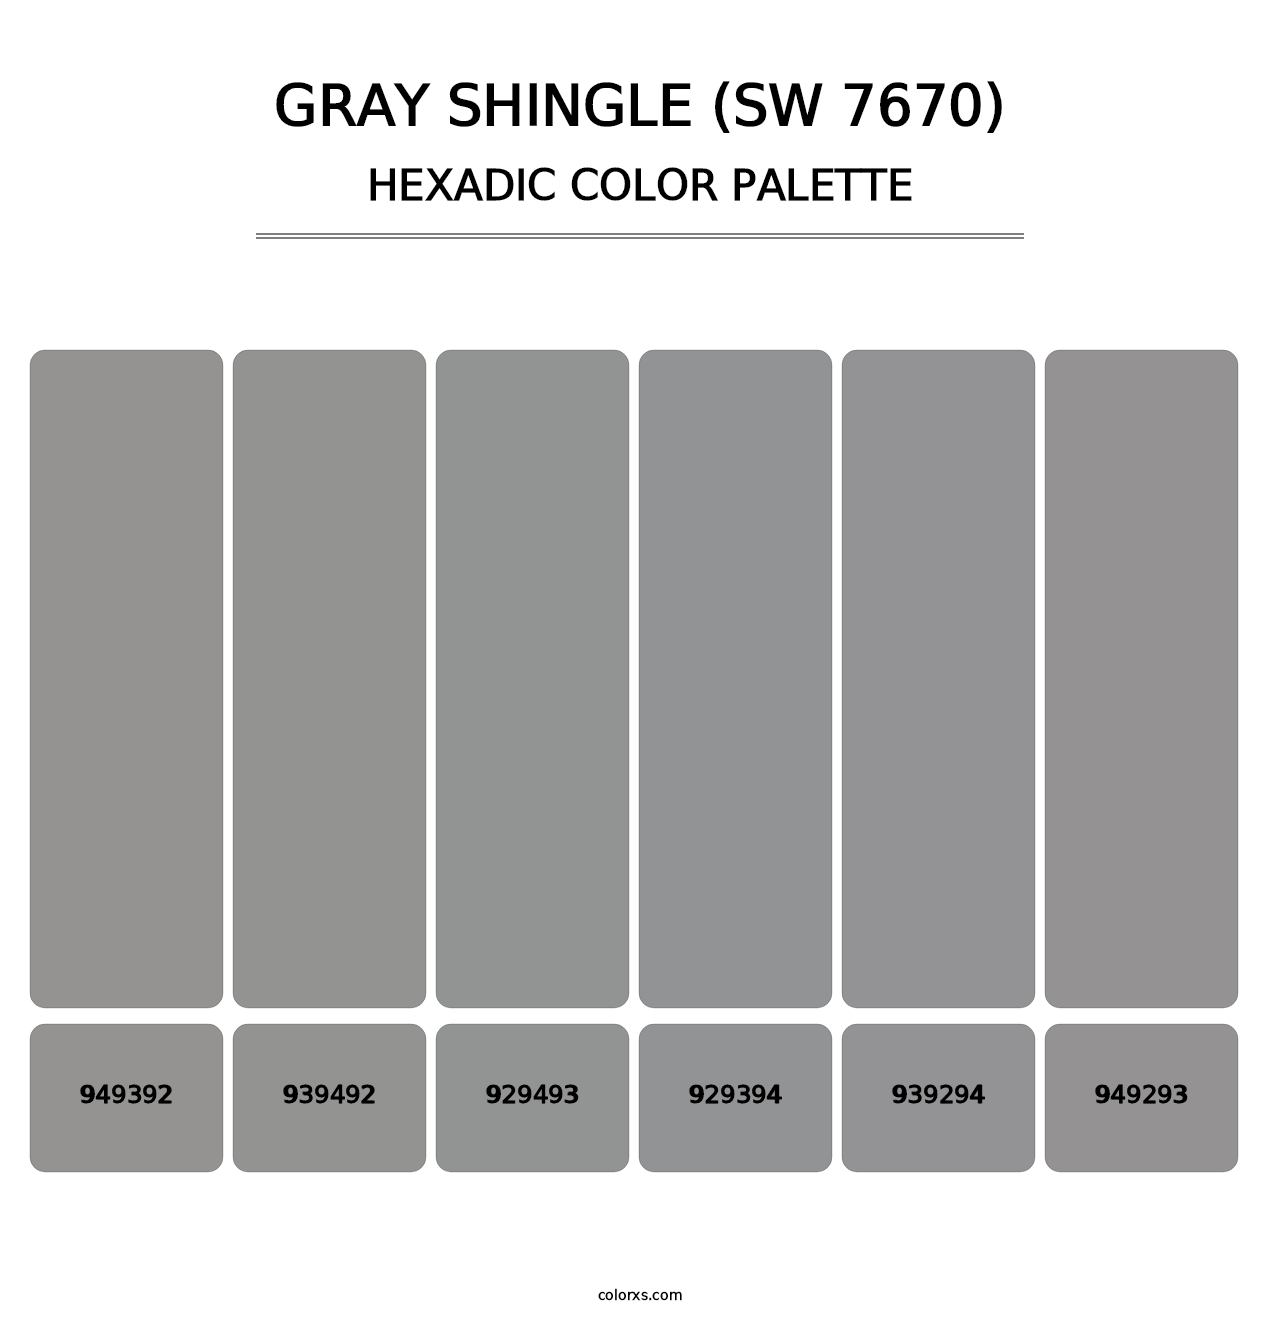 Gray Shingle (SW 7670) - Hexadic Color Palette